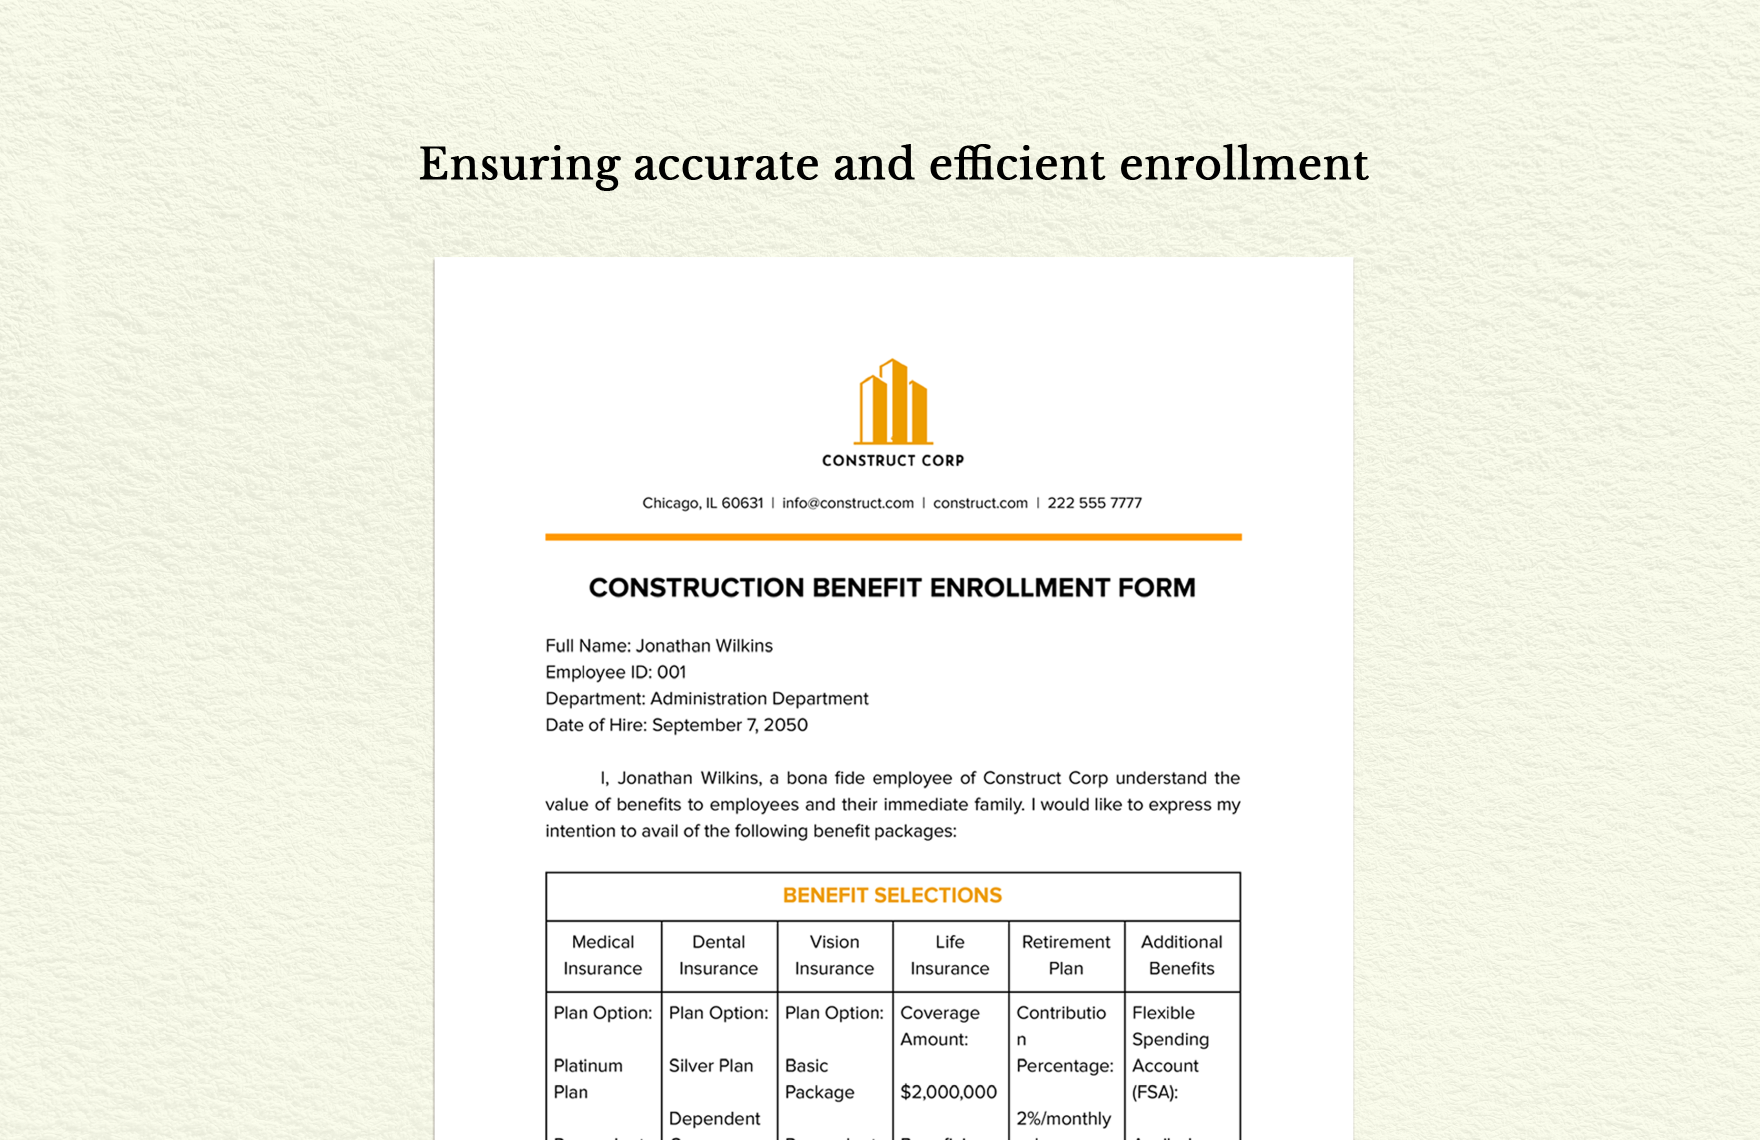 Construction Benefit Enrollment Form Template